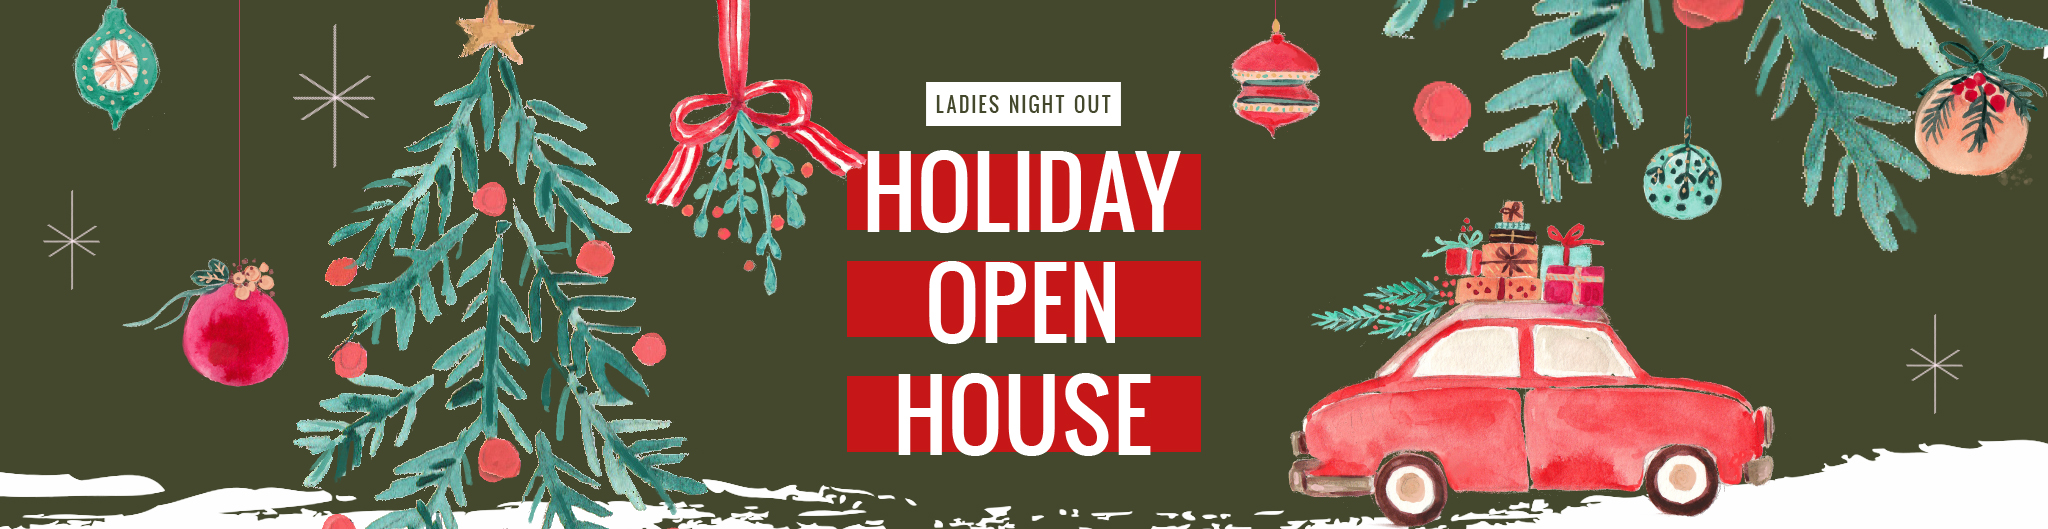 Ladies Night Out Holiday Shopping At Mahoney S Garden Center Mahoney S Garden Center